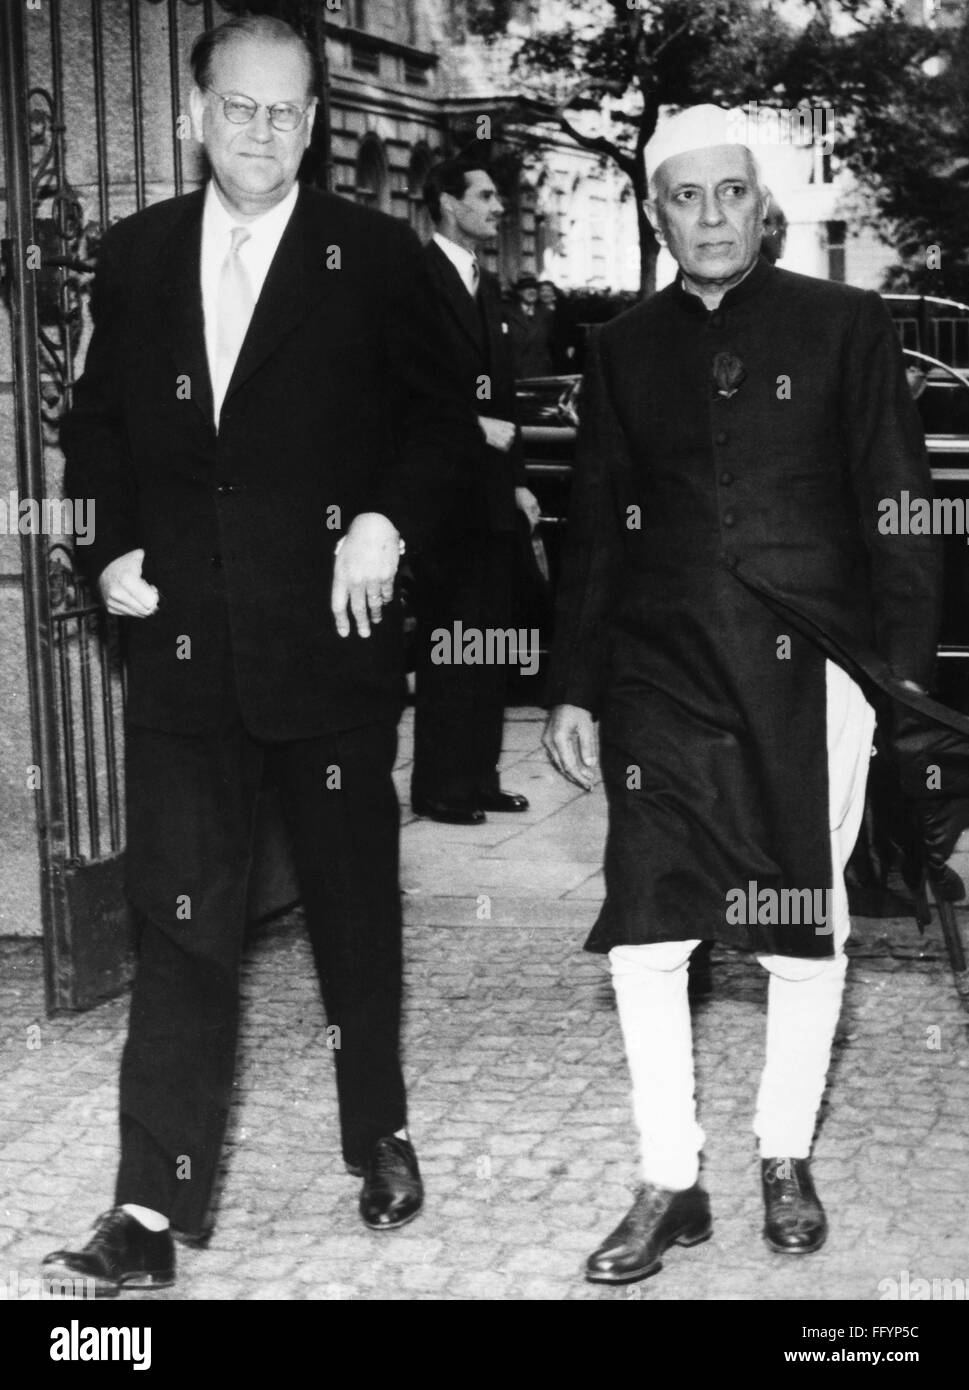 JAWAHARLAL NEHRU /n(1889-1964). Indian political leader. As Prime Minister of India, arriving at the Indian embassy in Stockholm, Sweden, with Swedish Prime Minister Tage Erlander (left), 22 June 1957. Stock Photo